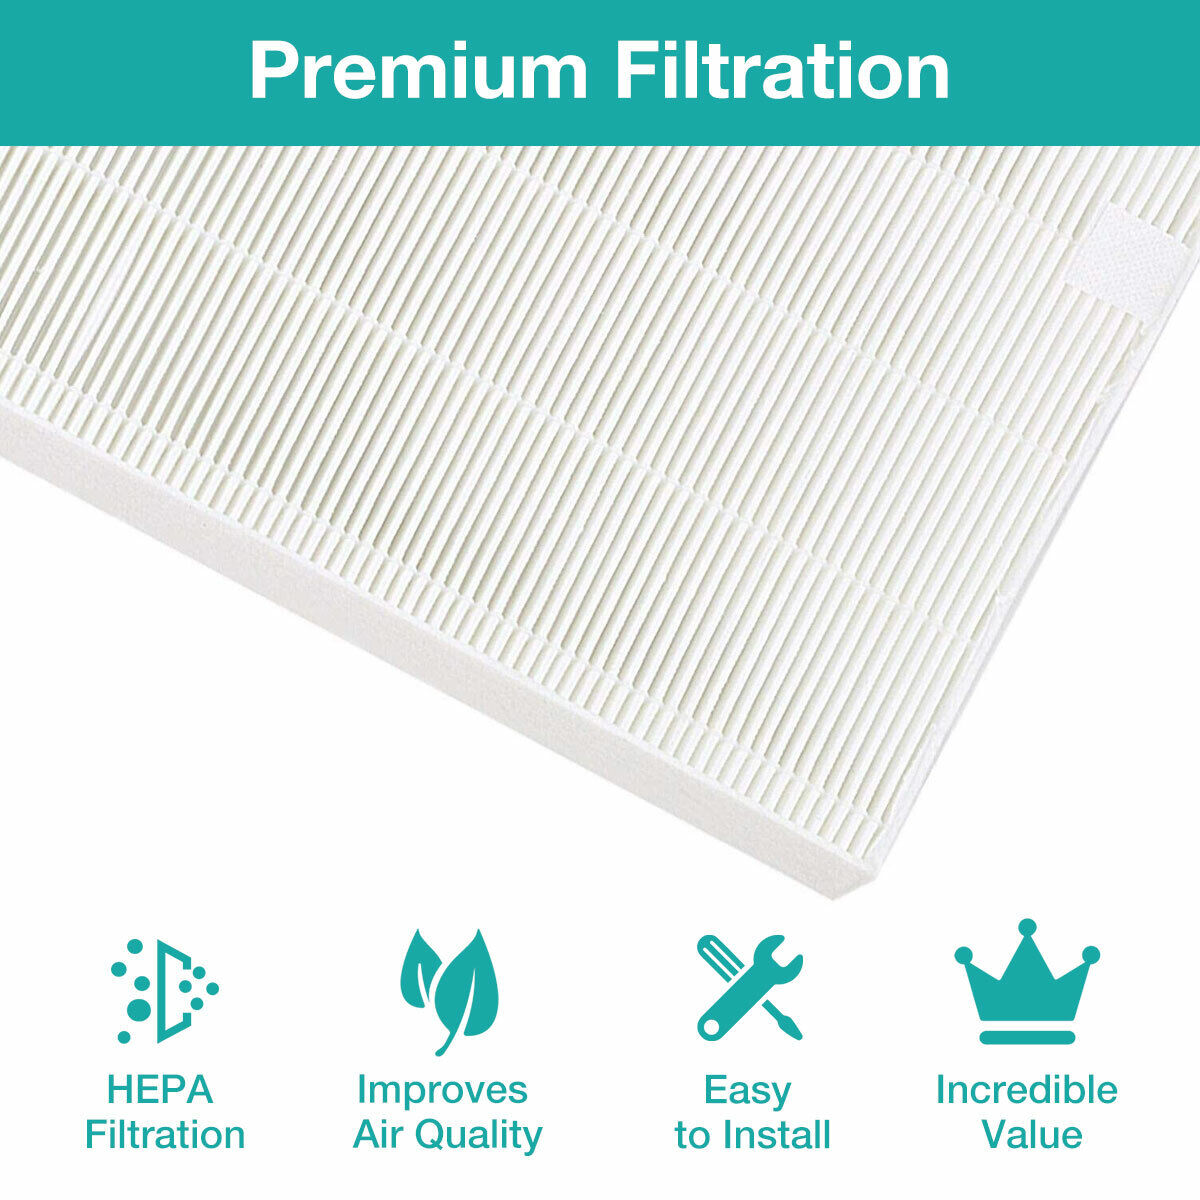 HEPA Premium Filtration